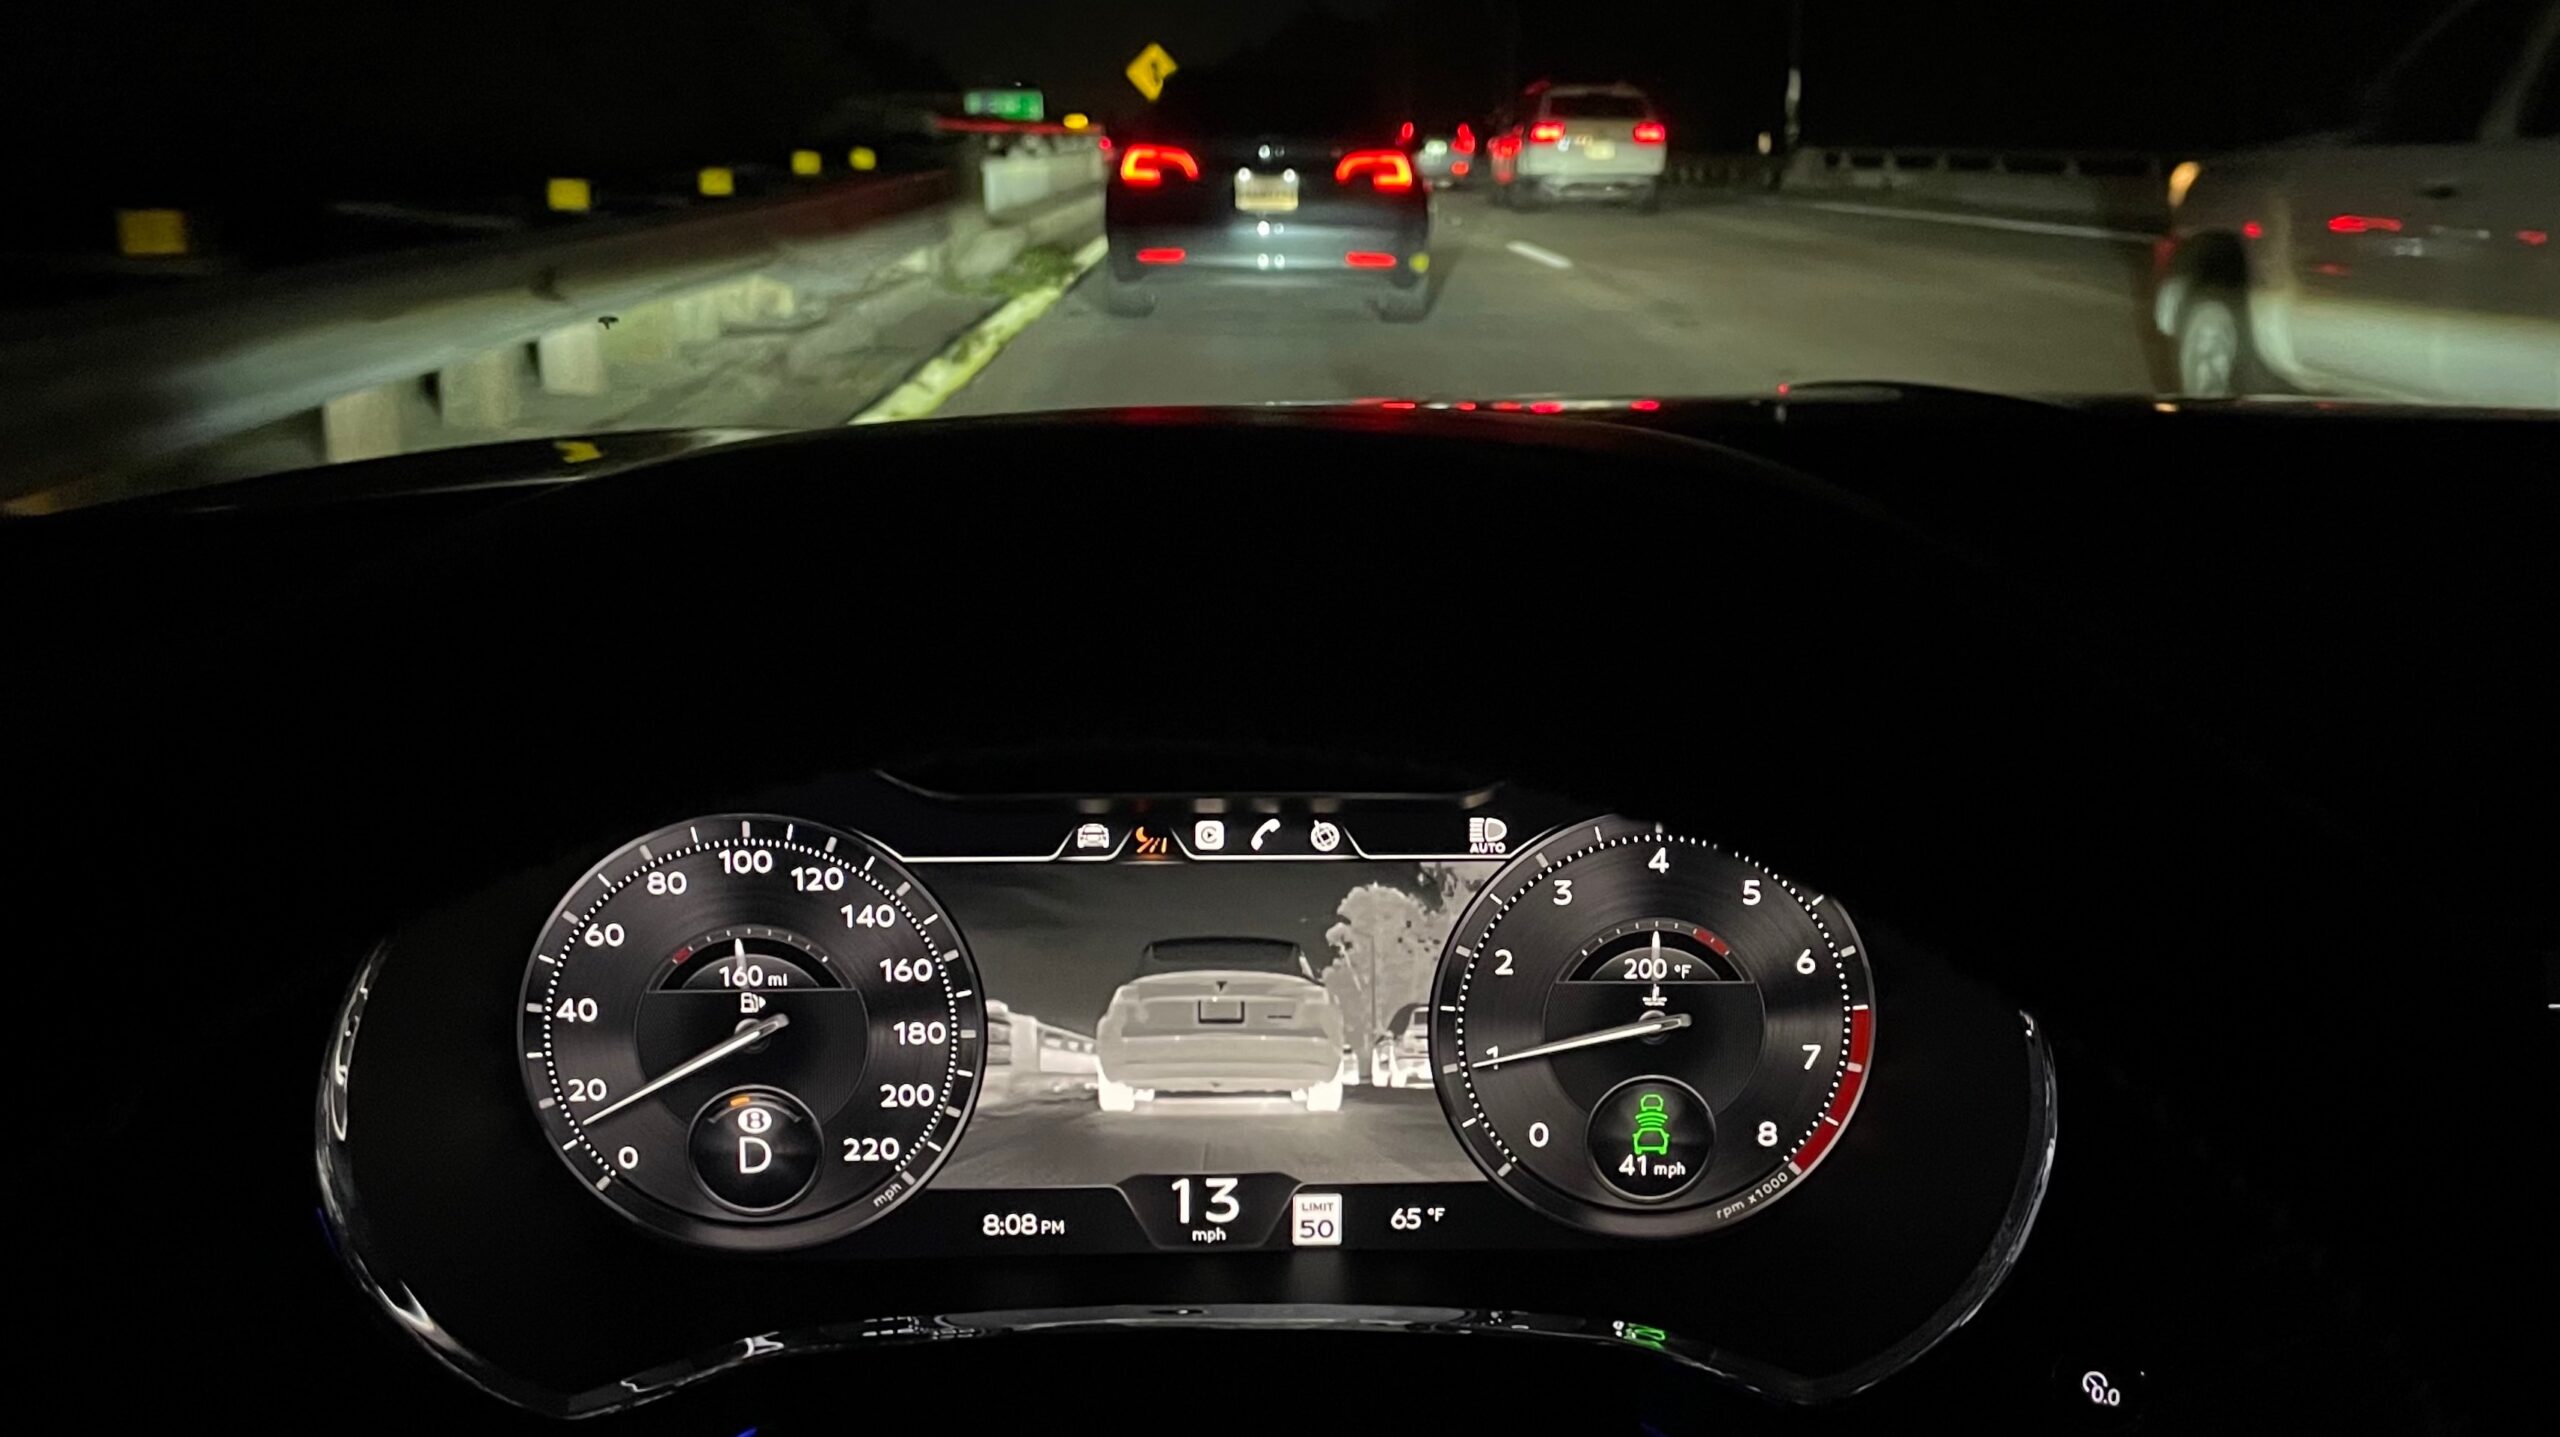 bentley in-car screen showing thermal imaging camera highlighting car tires